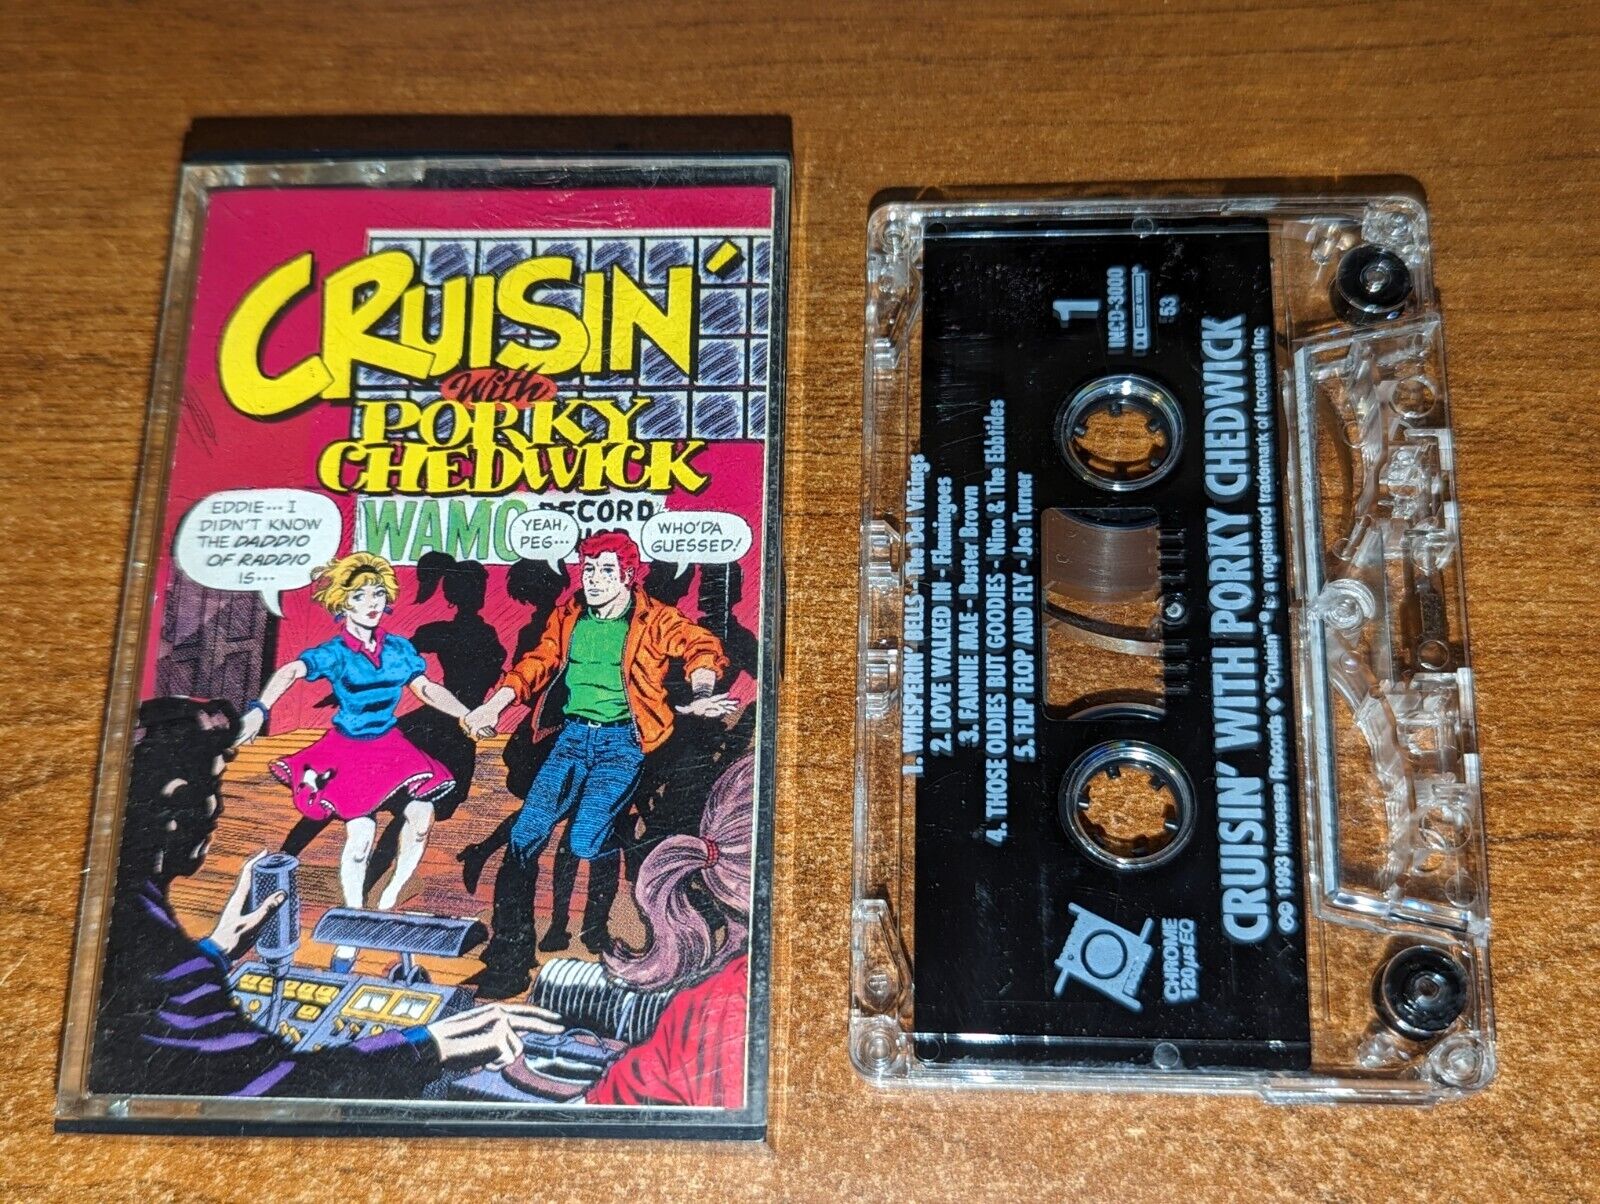 Cruisin' with Porky Chedwick Cassette Tape 1993 Increase Records WAMO Joe Turner